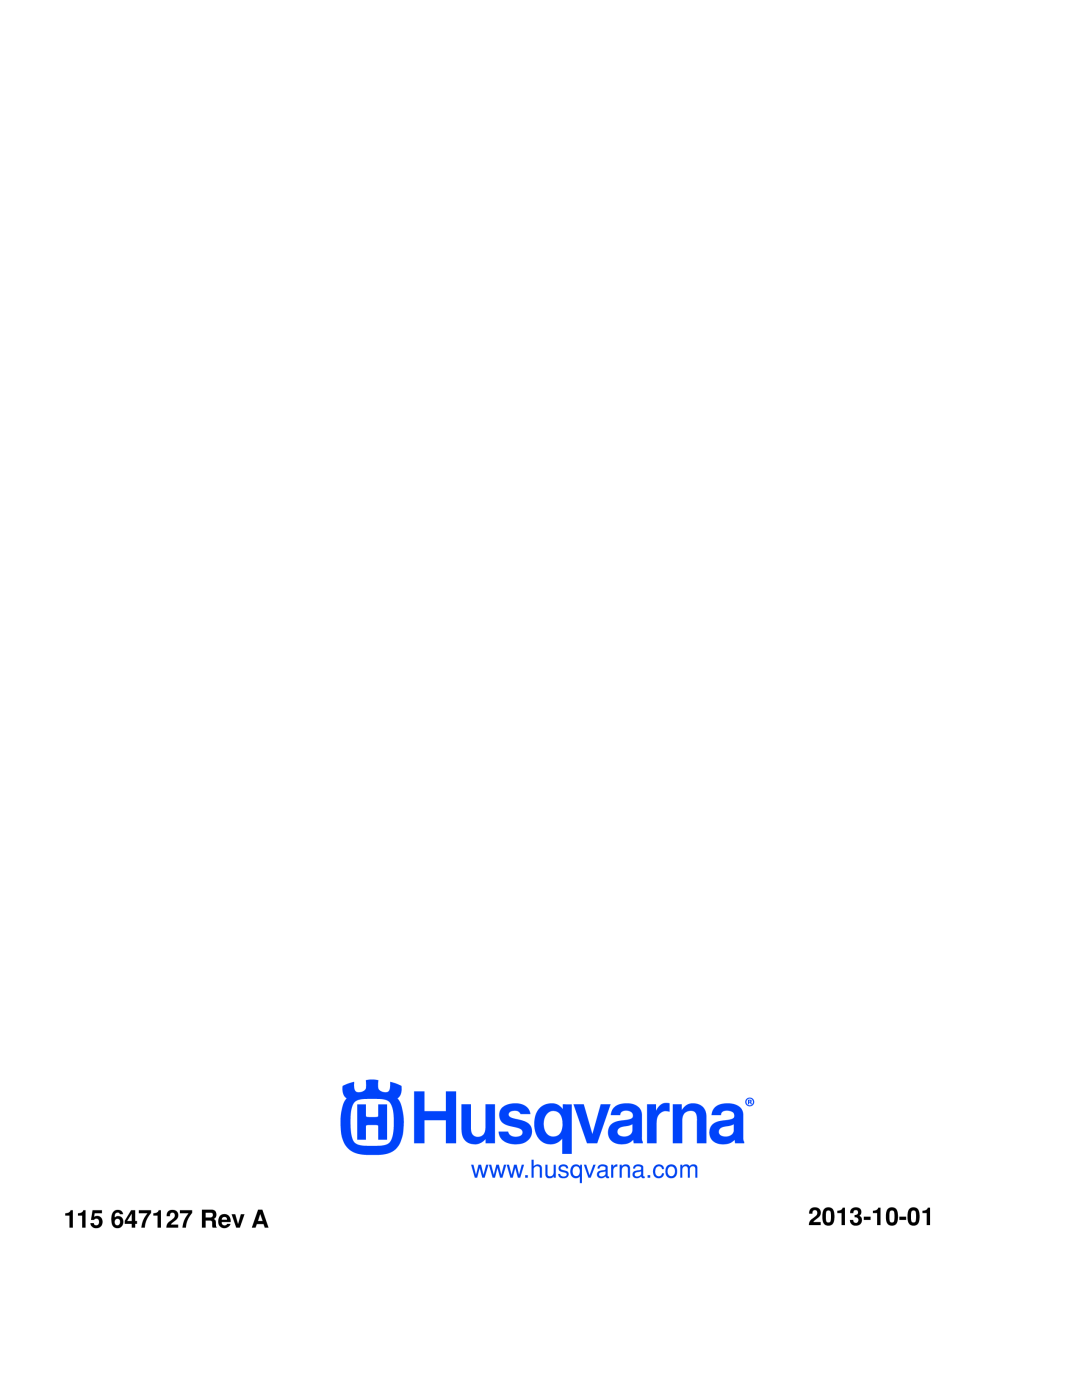 Husqvarna MZ61 warranty 115 647127 Rev A, 2013-10-01 